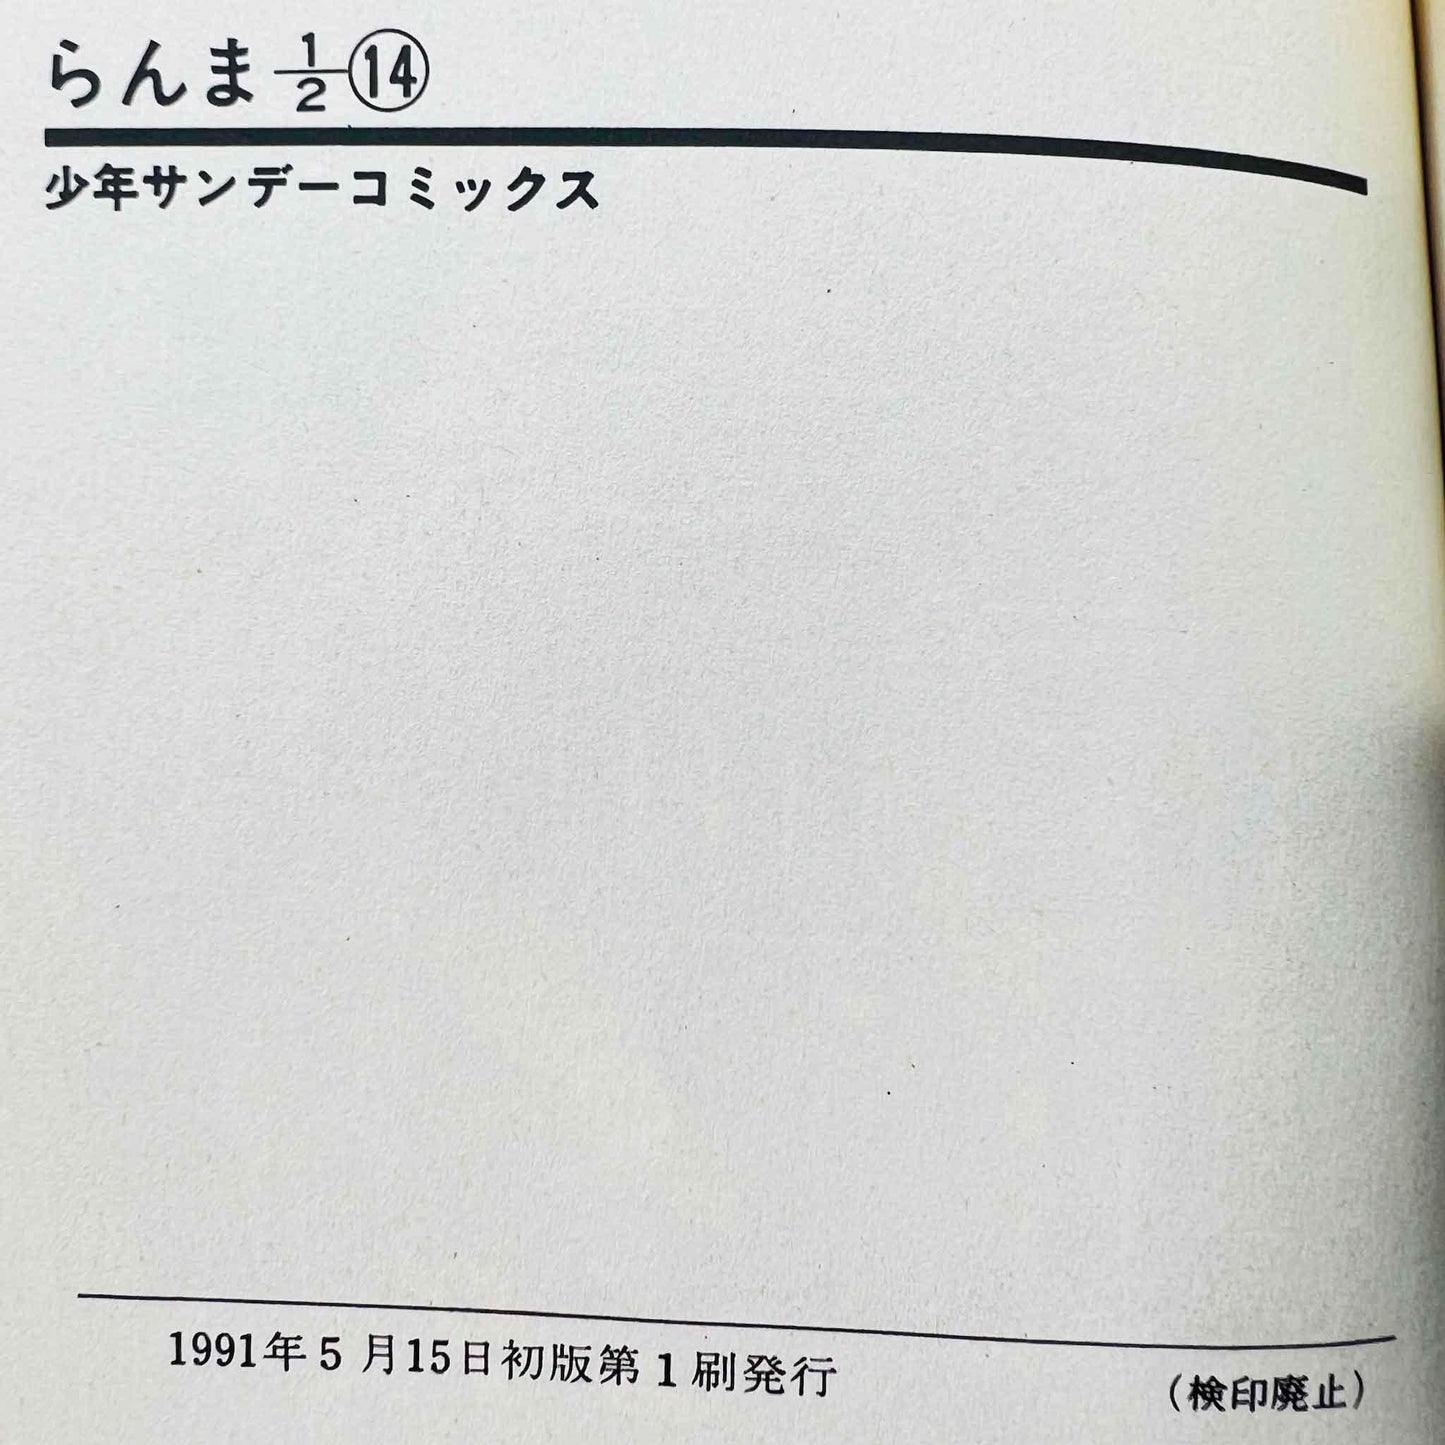 Ranma ½ - Volume 14 - 1stPrint.net - 1st First Print Edition Manga Store - M-RANMA-14-001